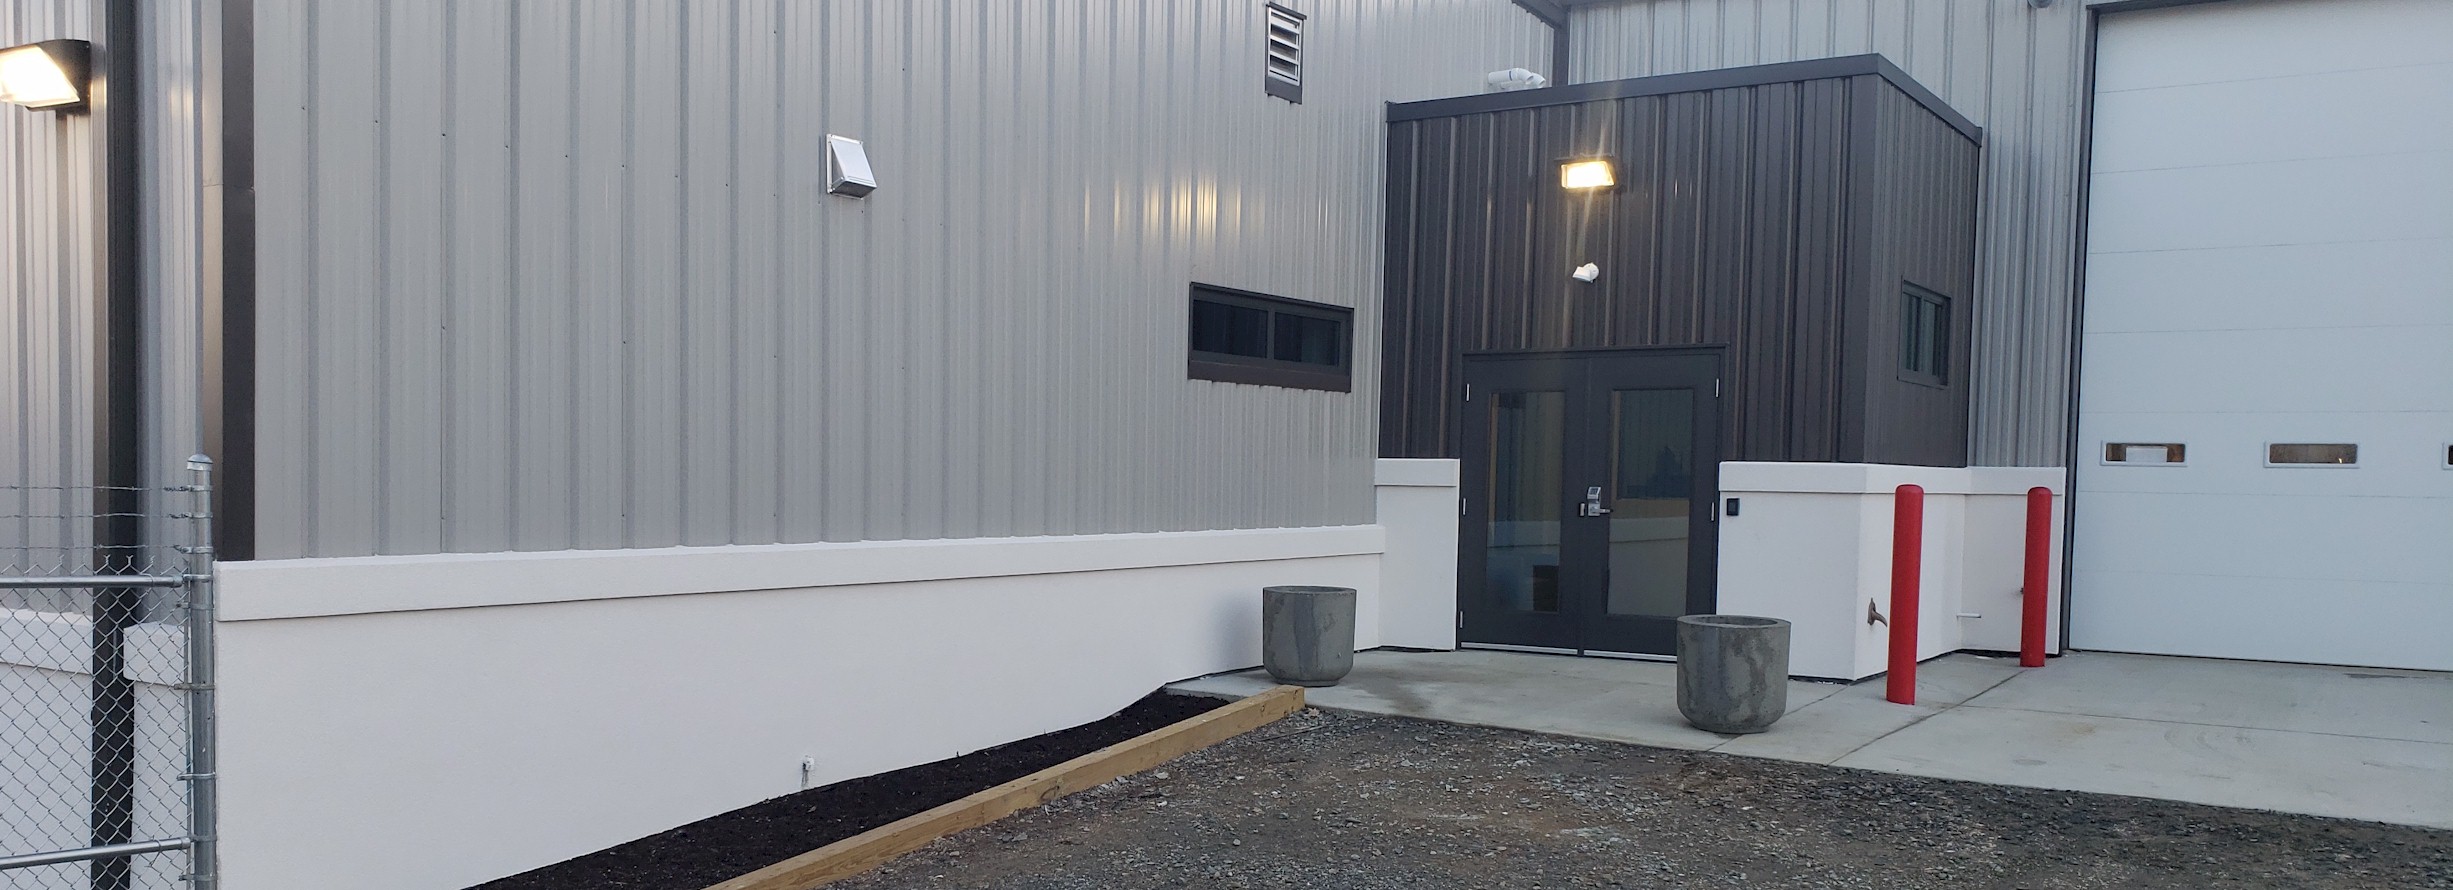 Barr-Nunn Charlotte, NC truck terminal building showing driver main entrance